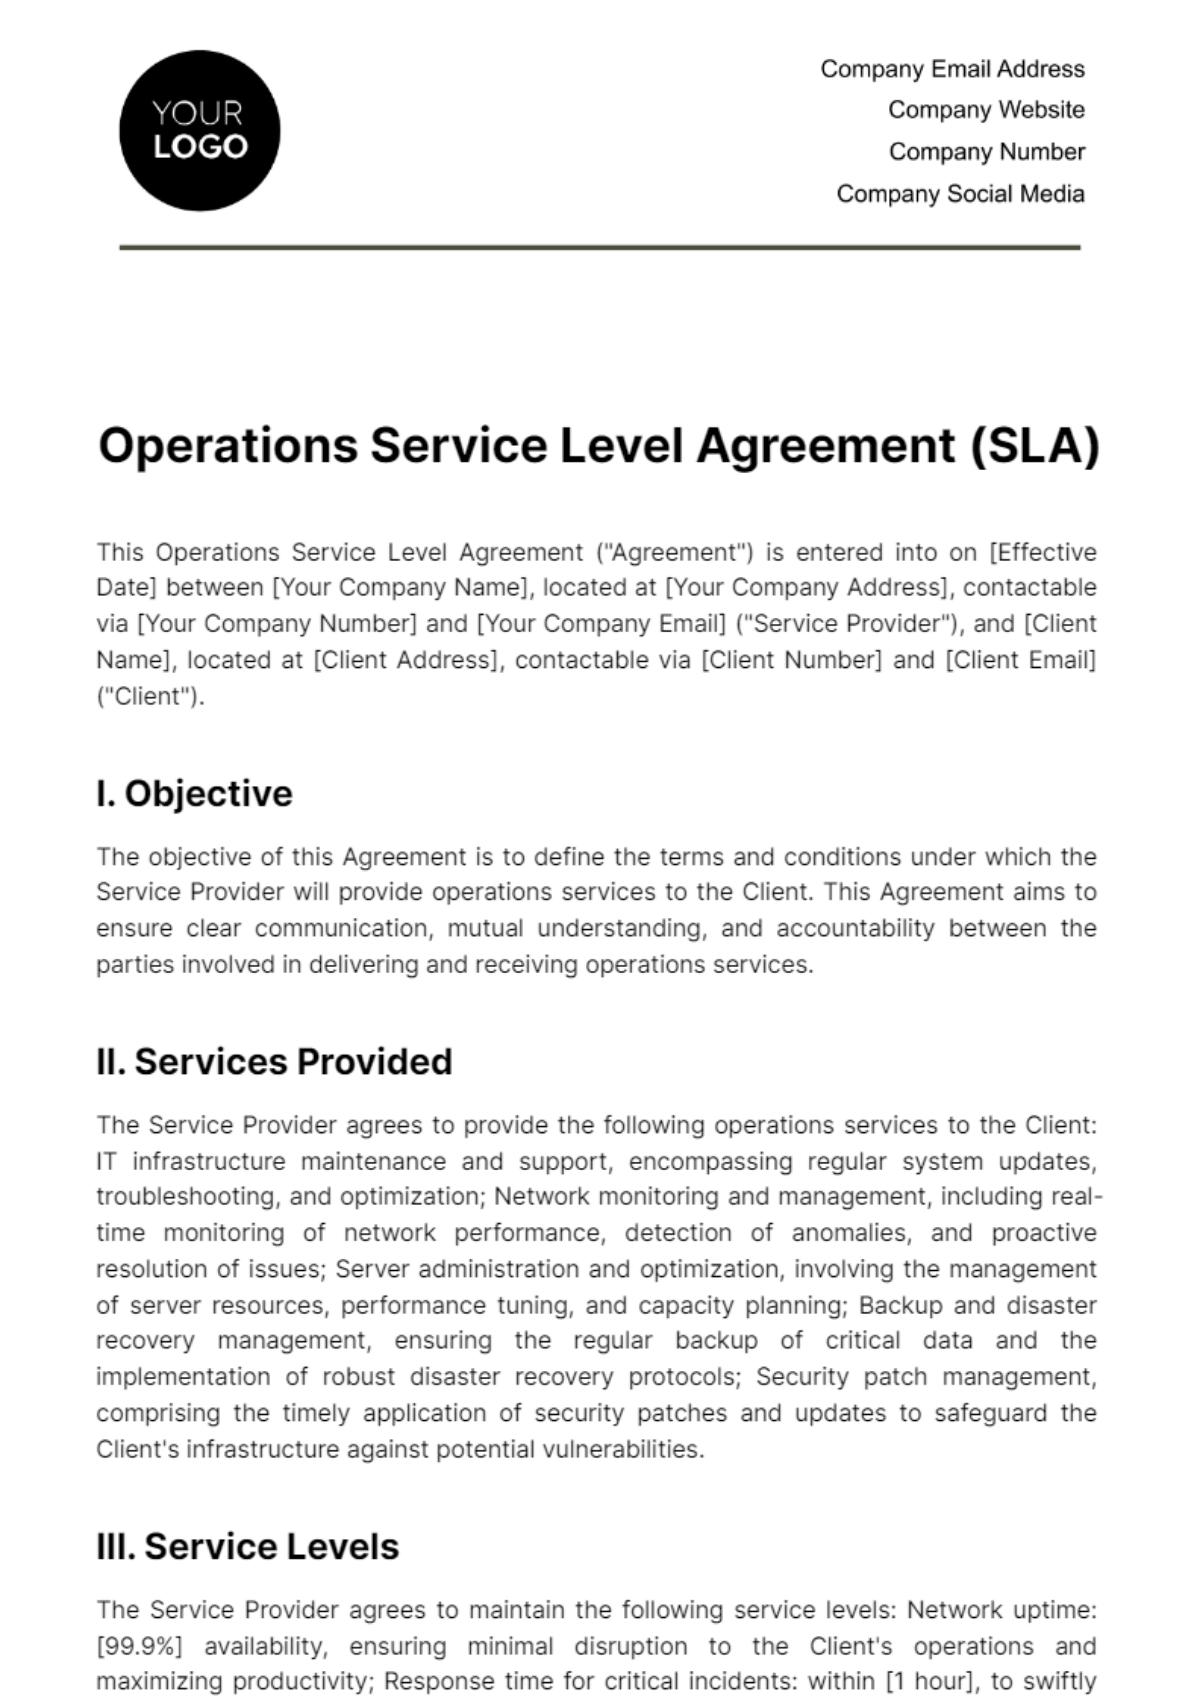 Operations Service Level Agreement (SLA) Template